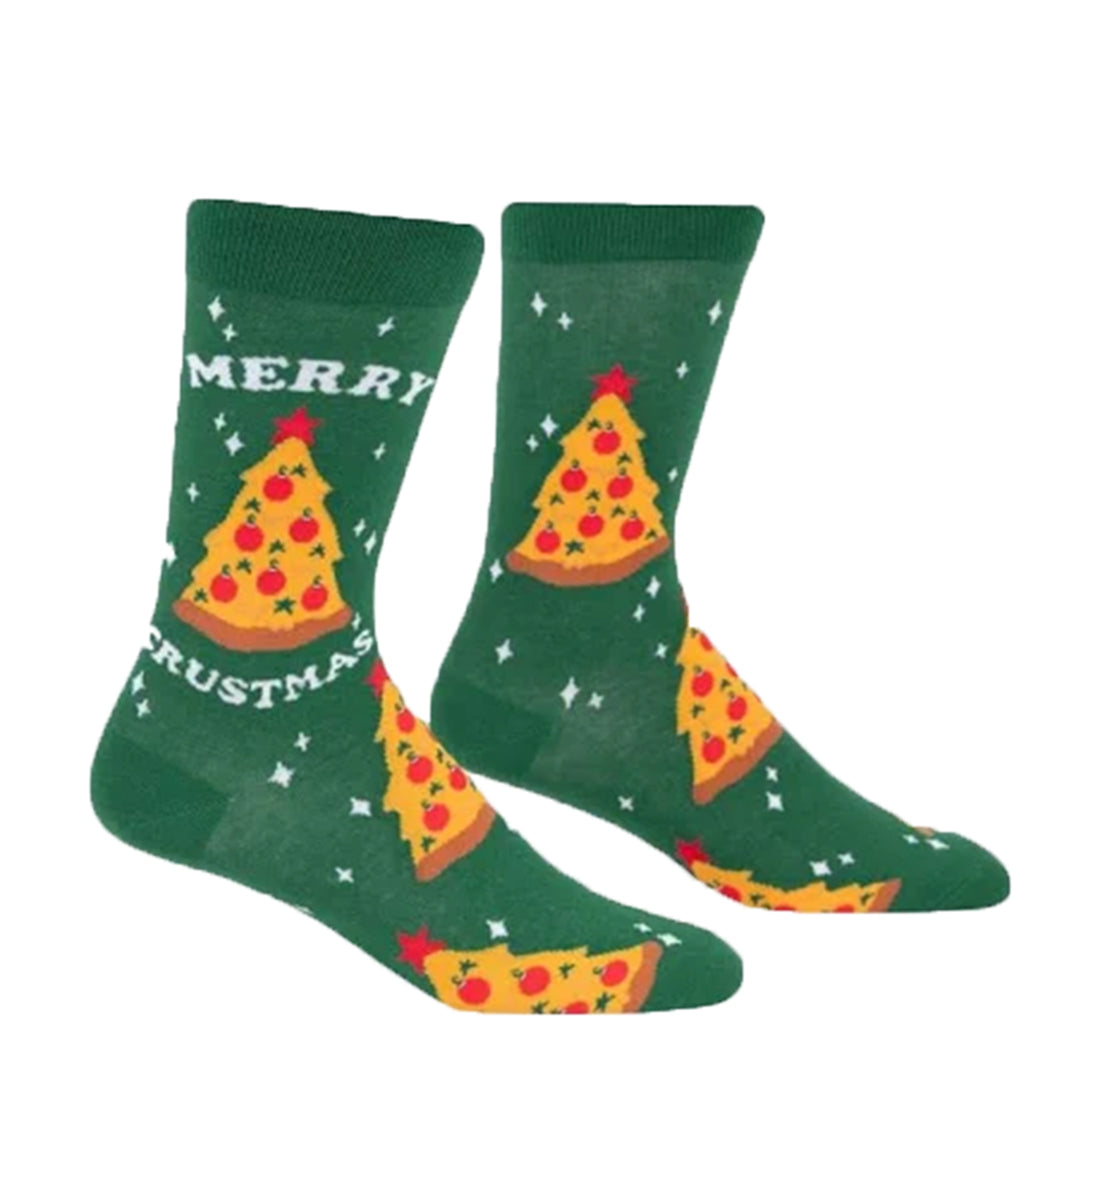 SOCK it to me Men's Crew Socks (MEF0474),Merry Crustmas - Merry Crustmas,One Size